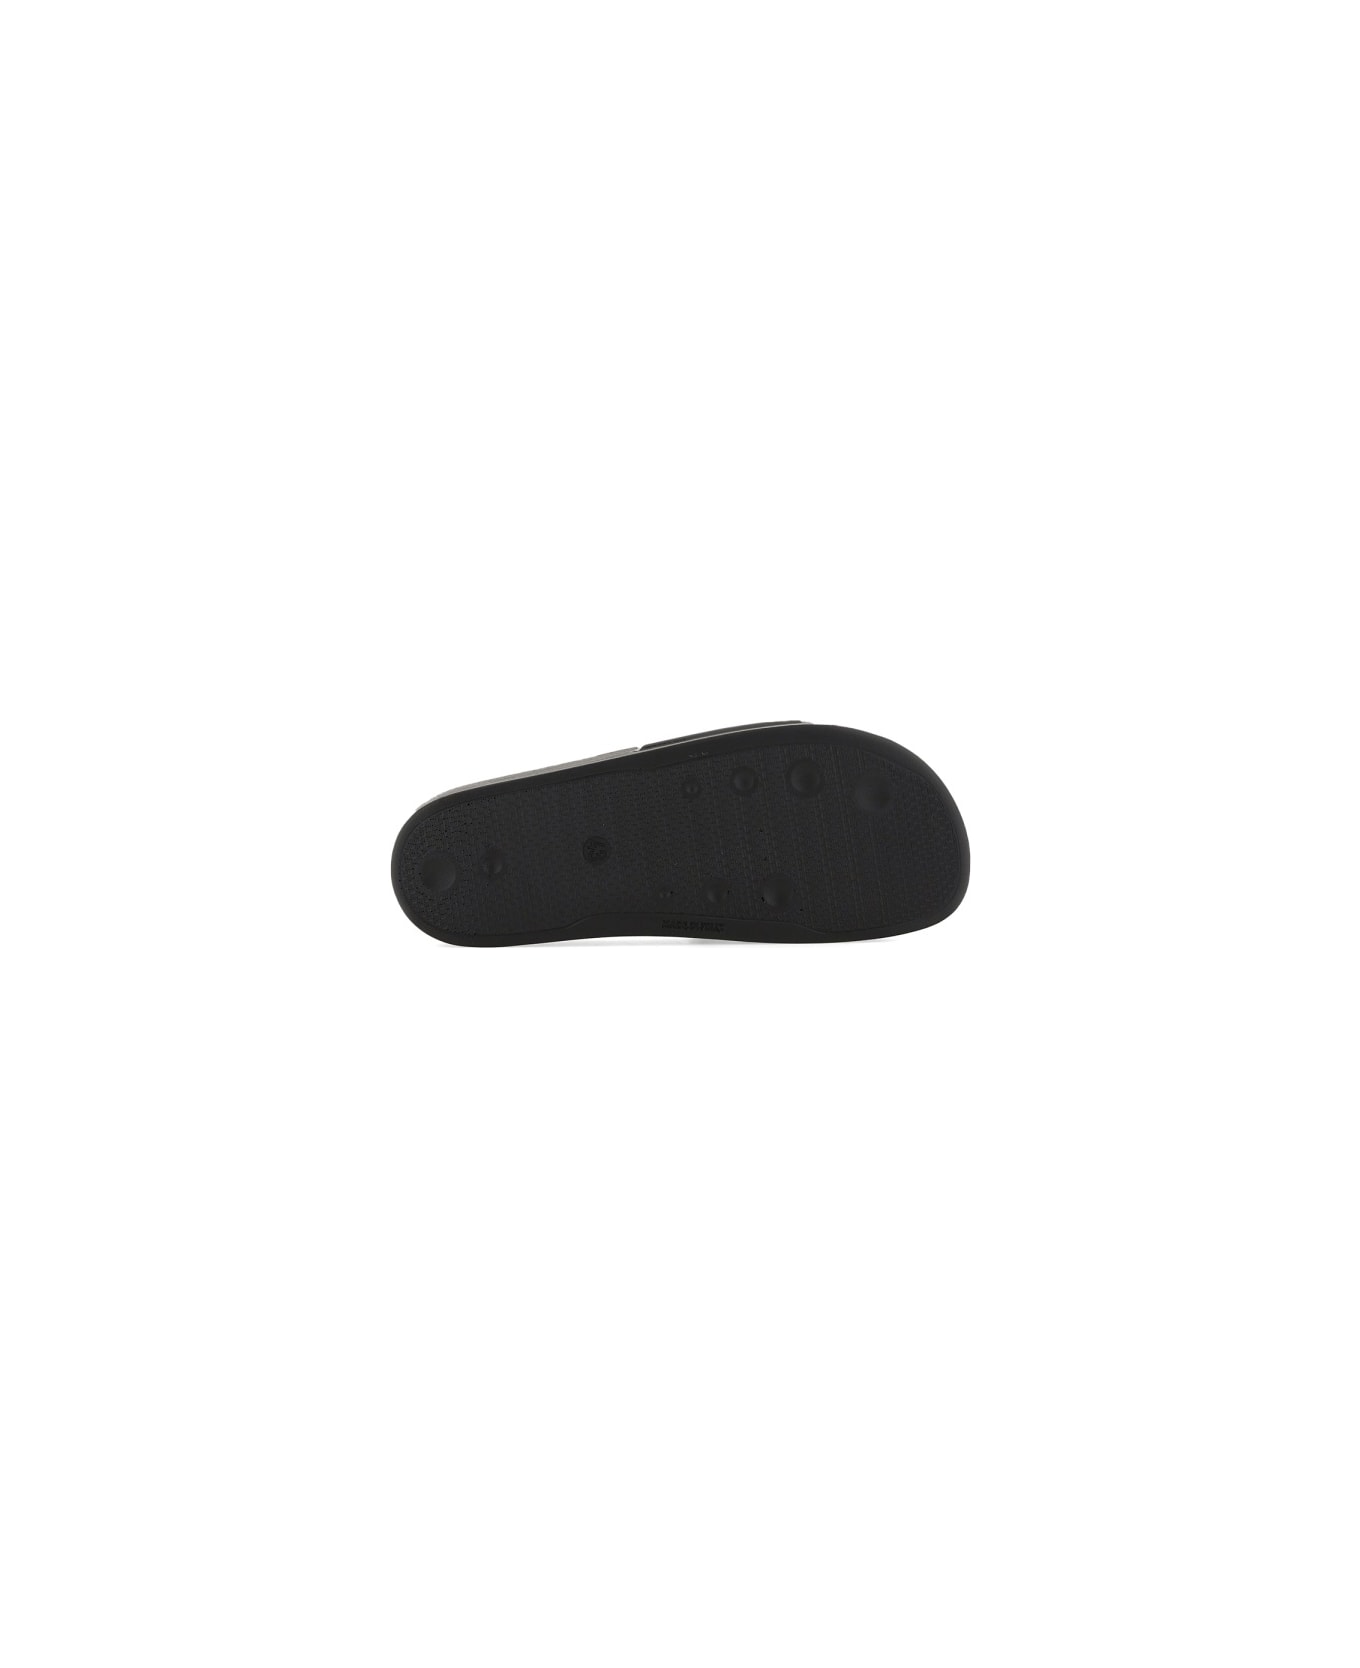 Moschino Sandal With Logo - BLACK